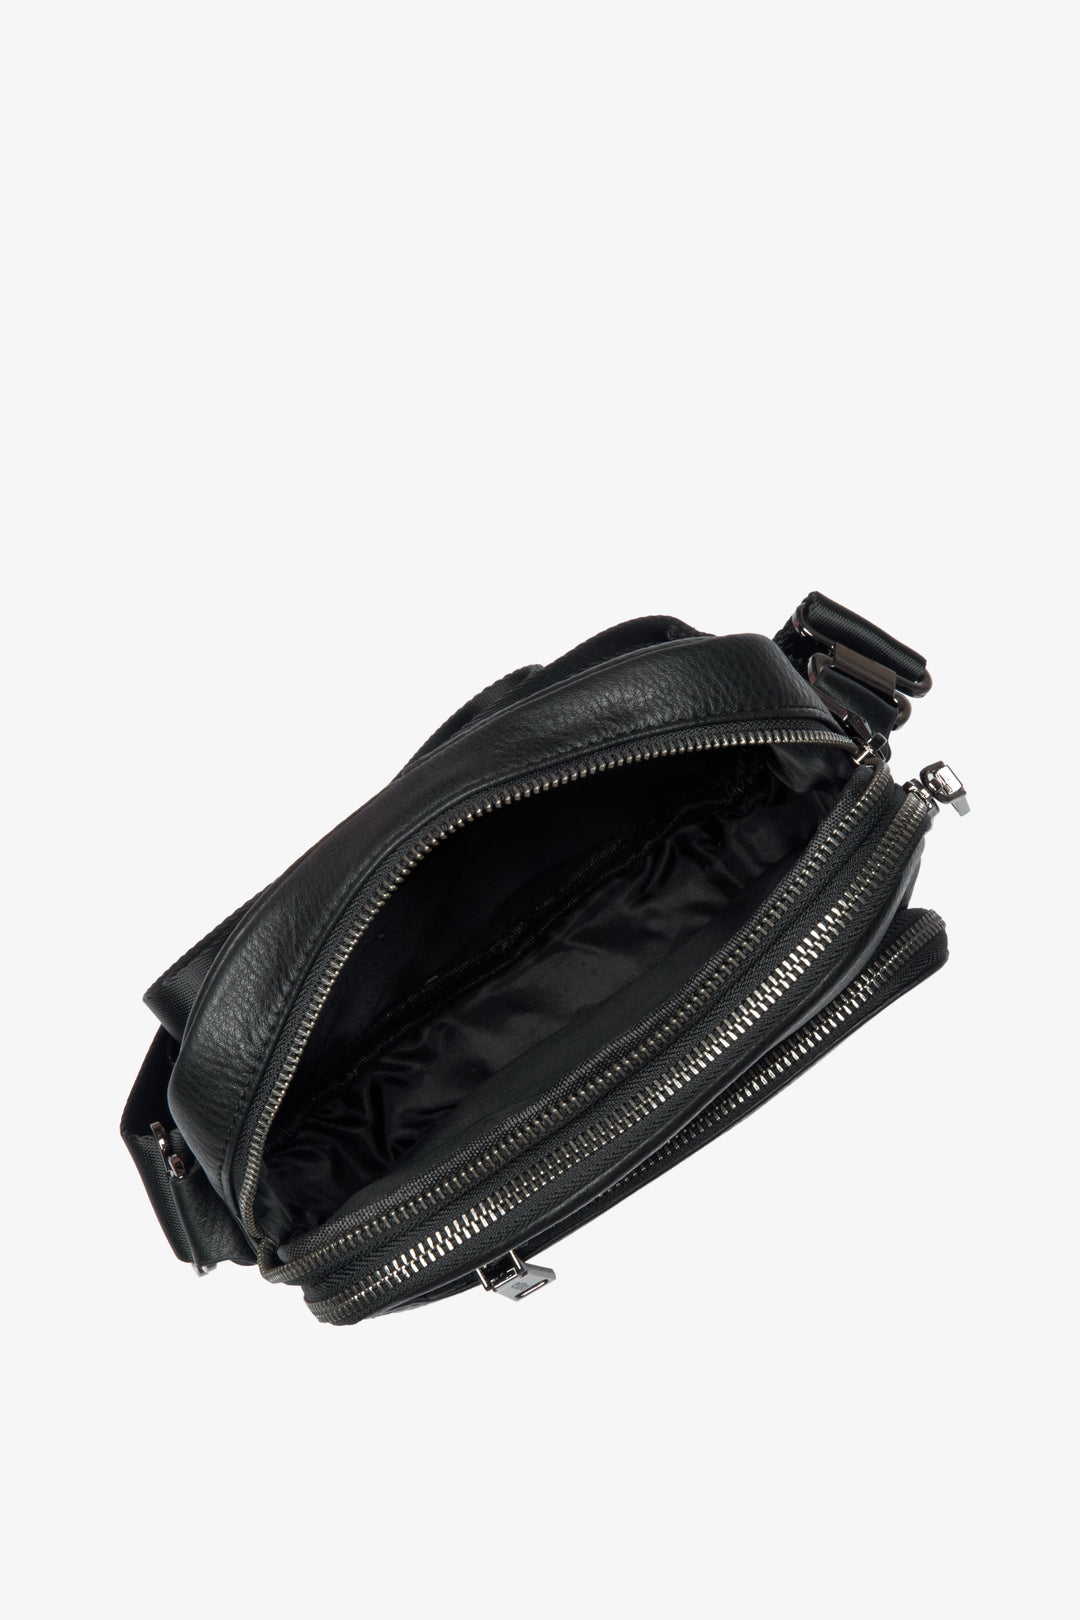 Men's pouch by Estro in black color - close-up on the interior.